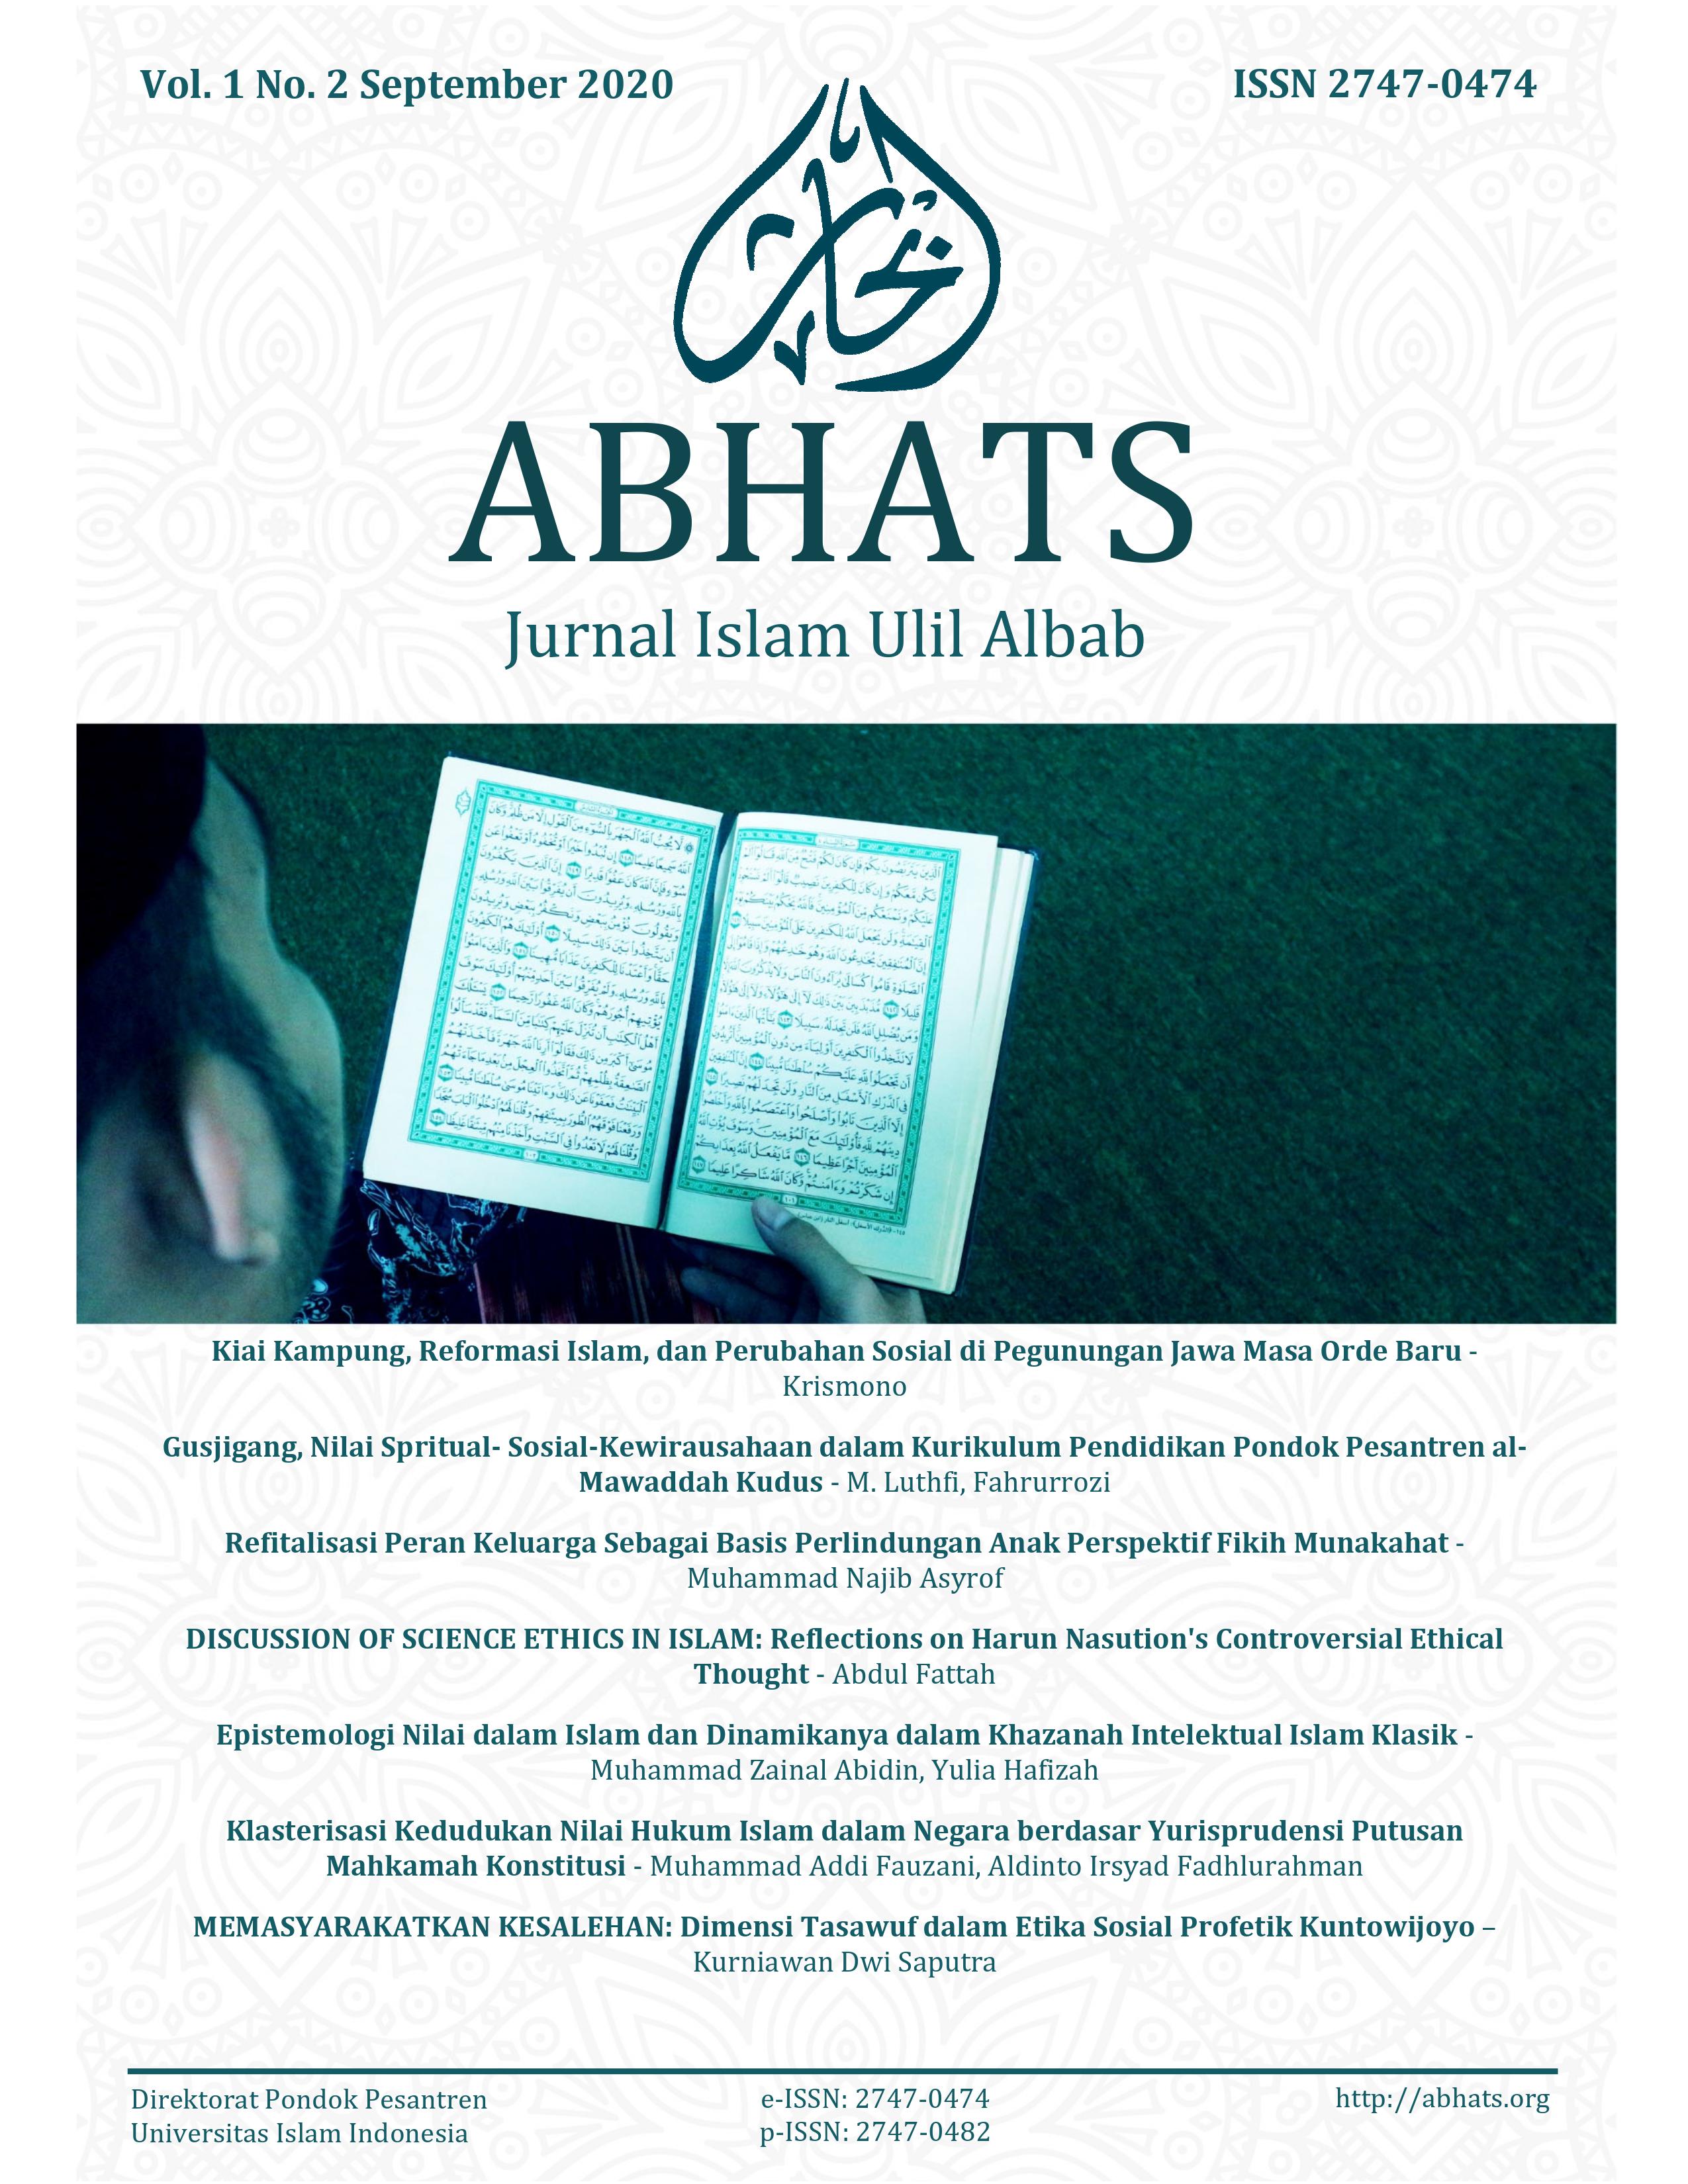 Cover Abhats Jurnal Islam Ulil Albab Vol 1 Issue 2 September 2020